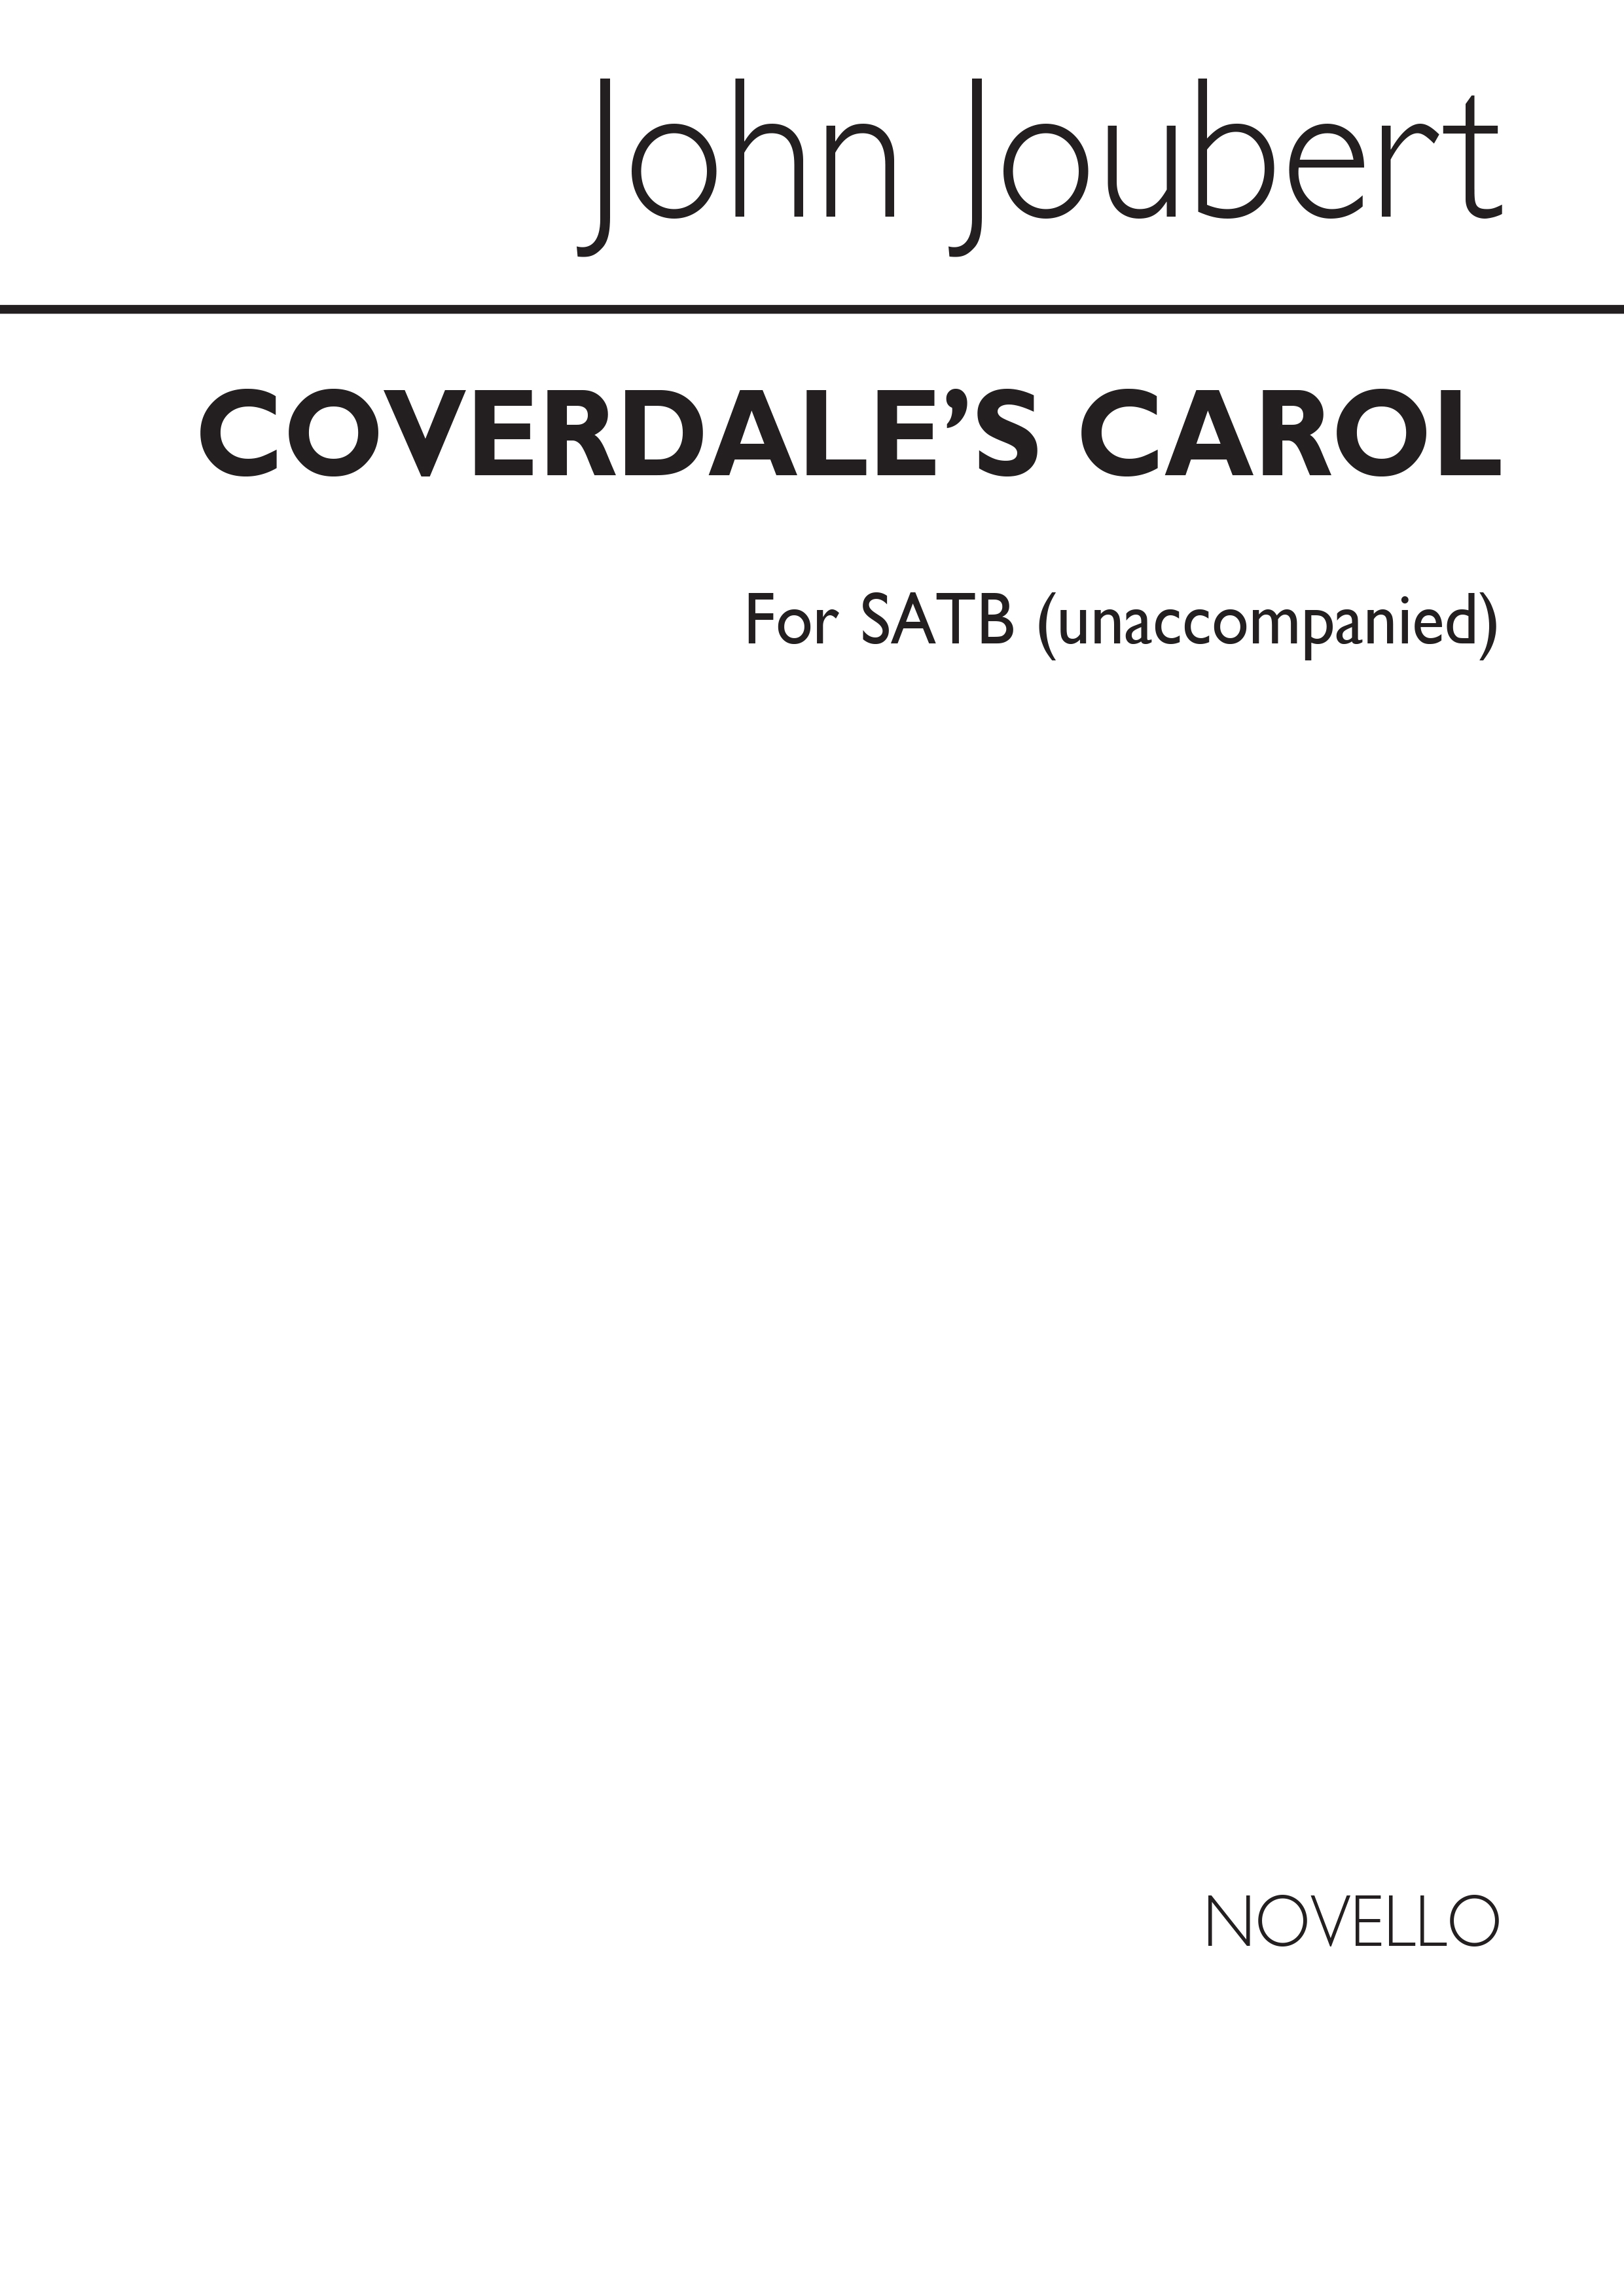 John Joubert: Coverdale's Carol (SATB)